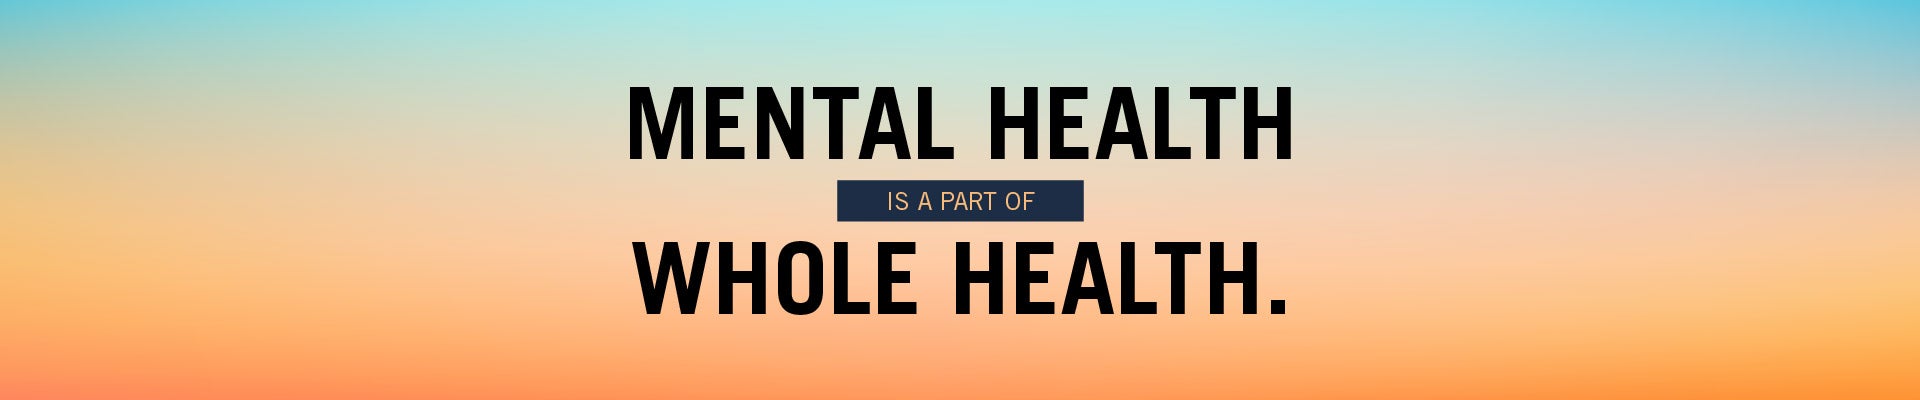 Mental Health is Whole Health